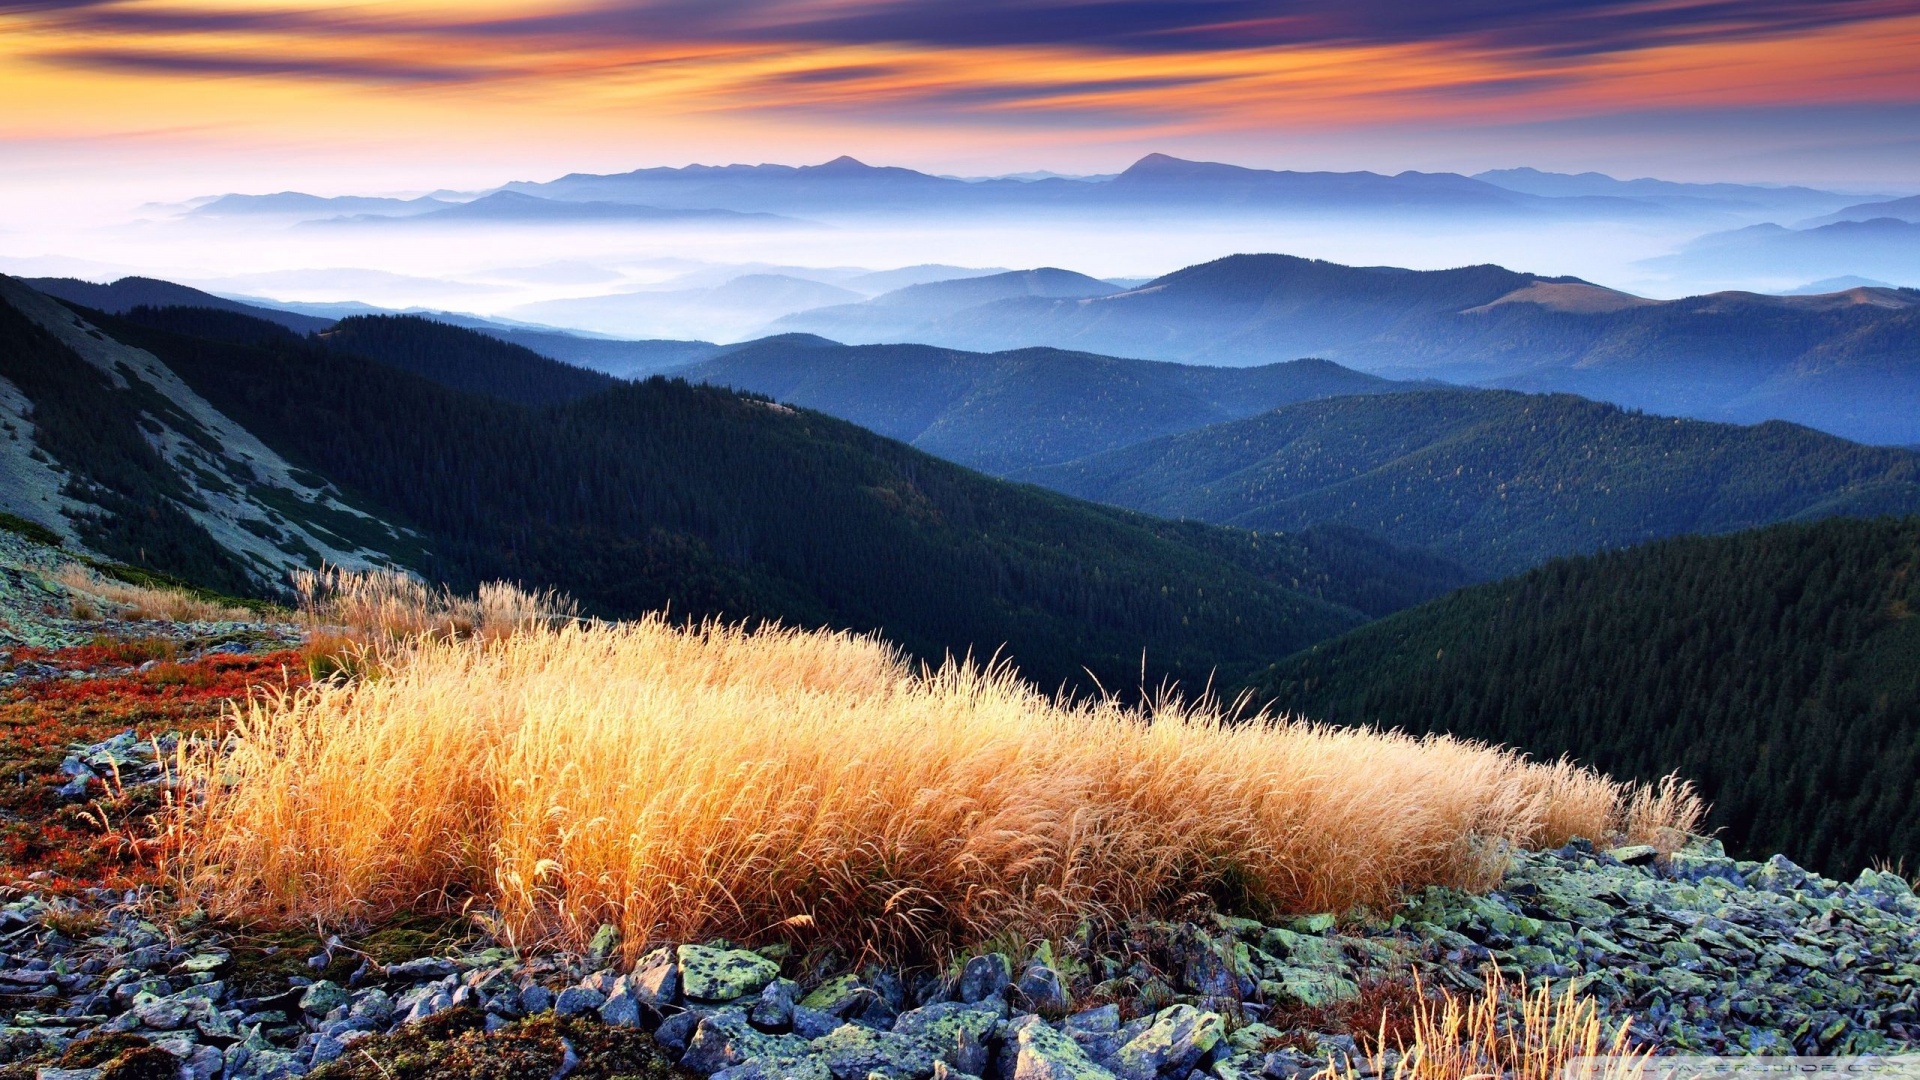 Mountain Range Sunset Dusk Scenery 4K Wallpaper iPhone HD Phone 4470f